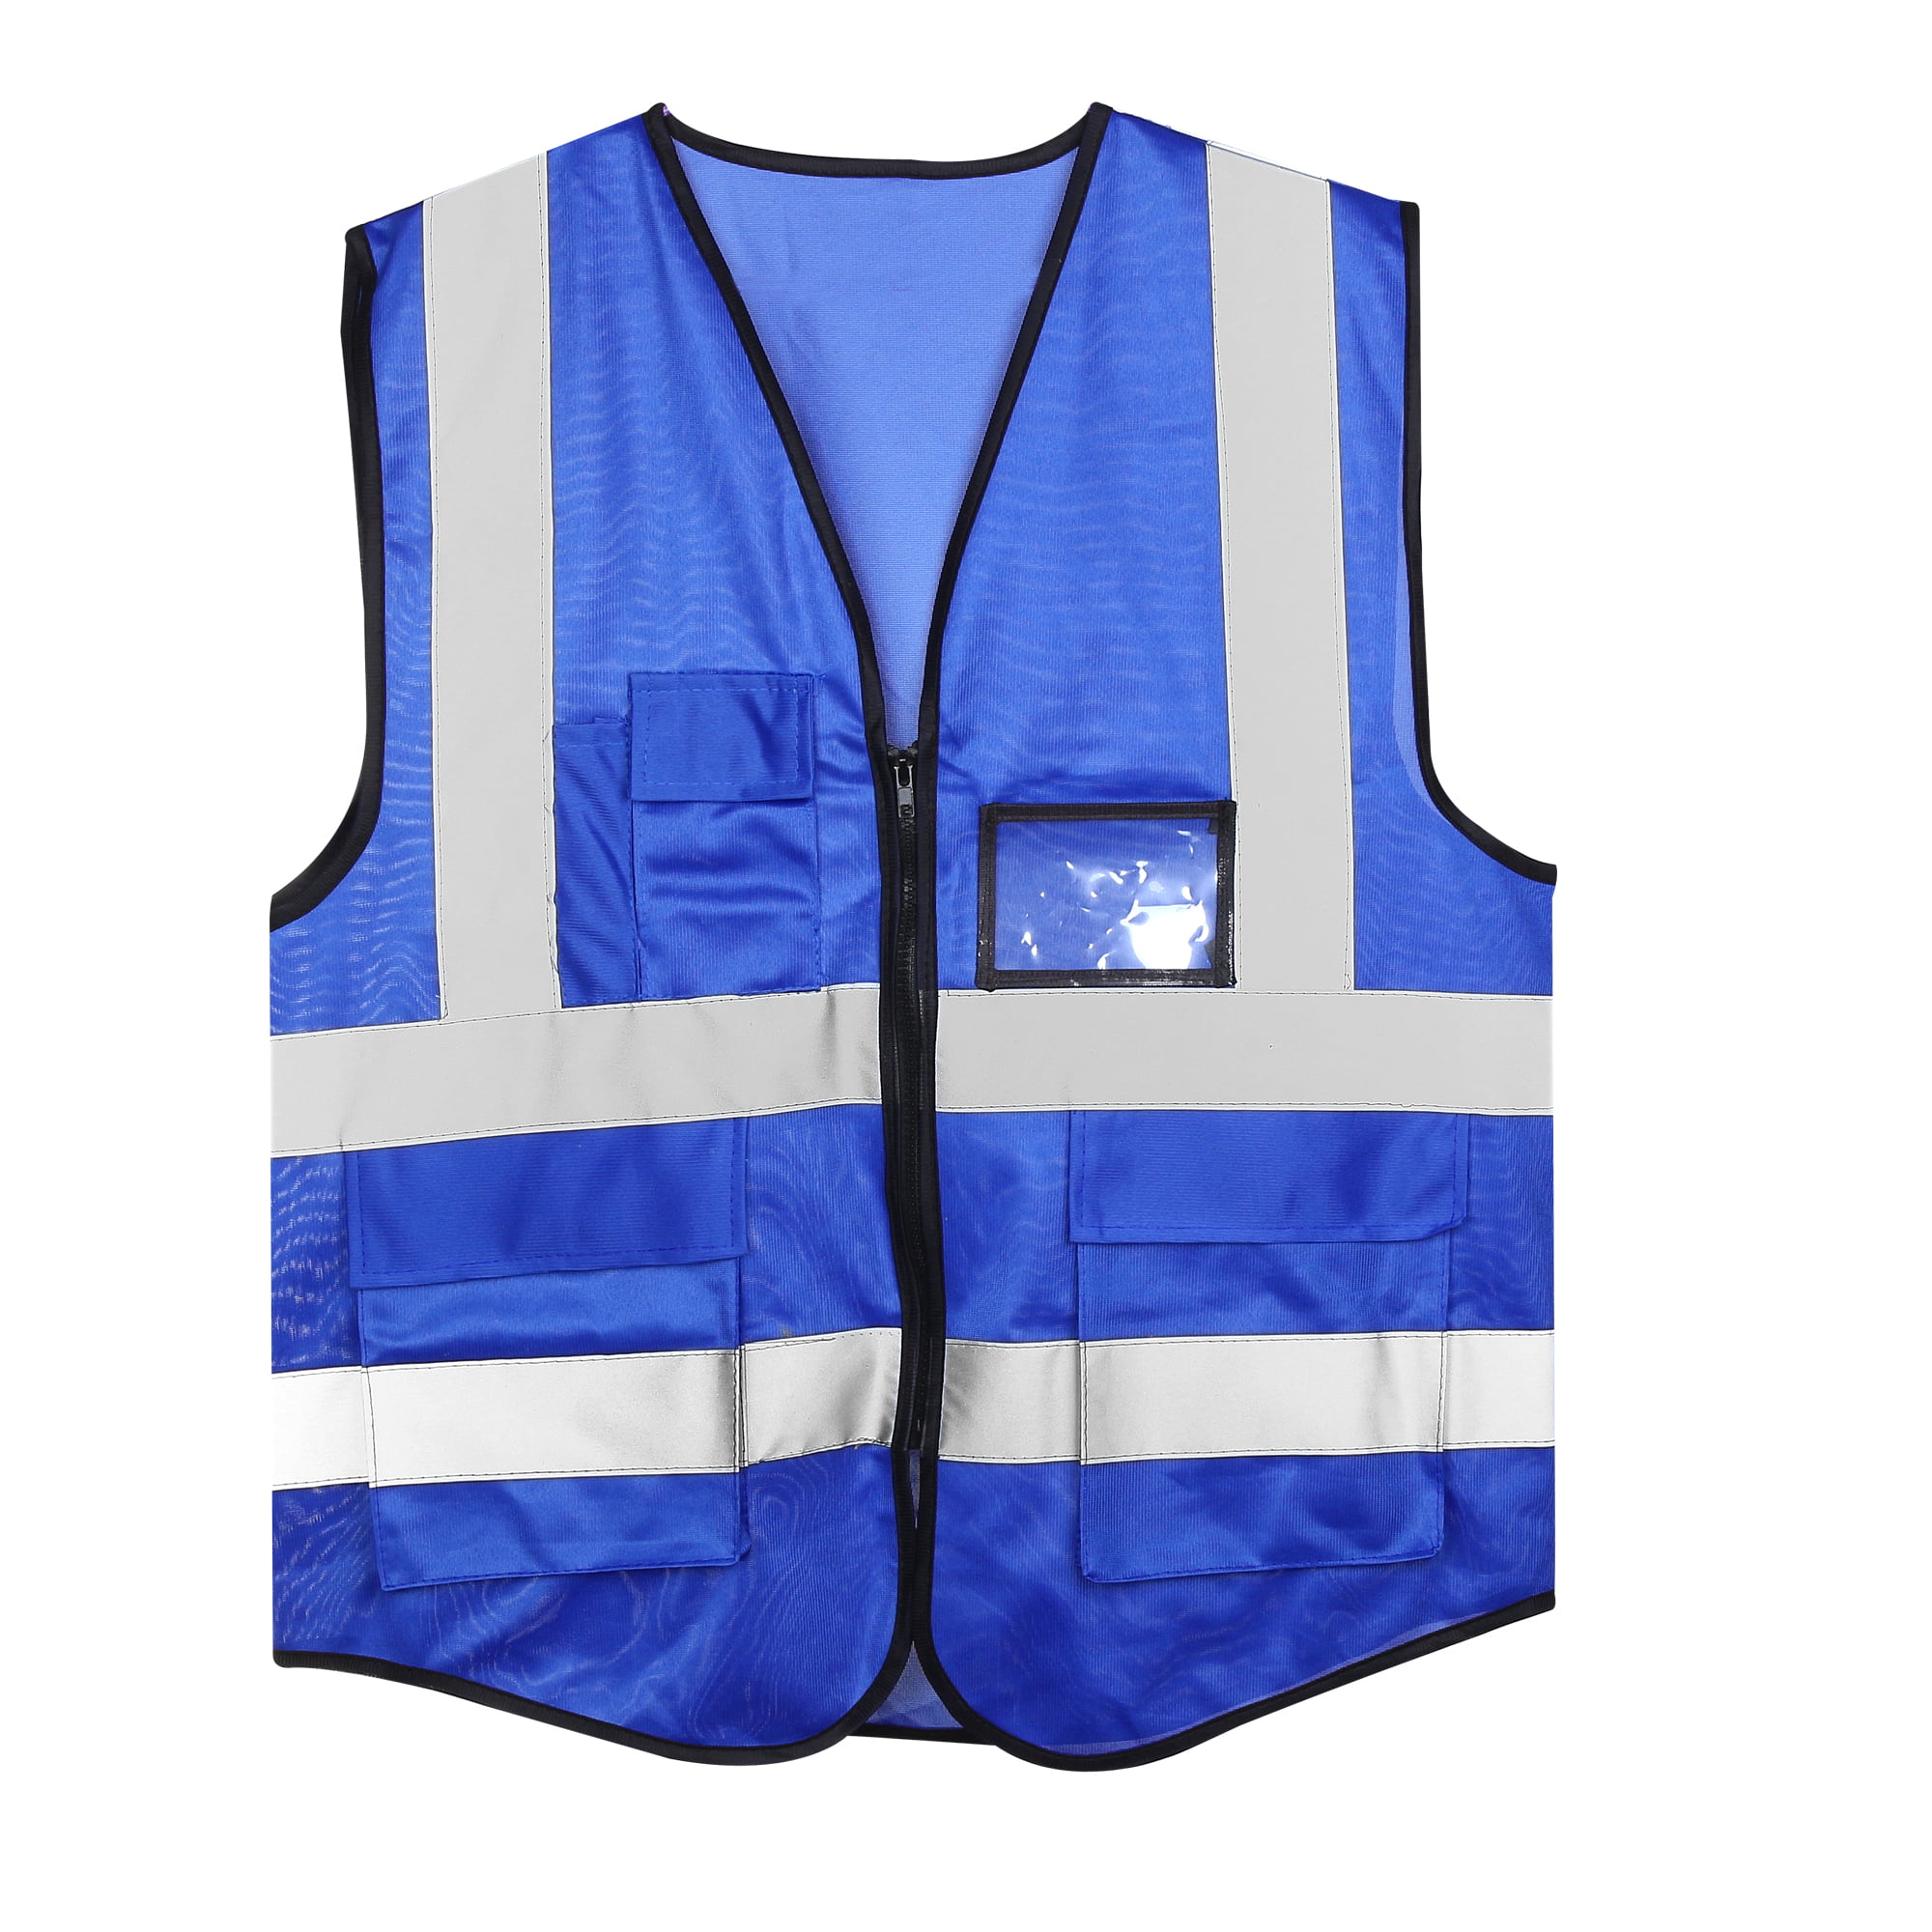 Adjustable Safety Vest Reflective Jacket Security Waistcoat Construction Traffic 